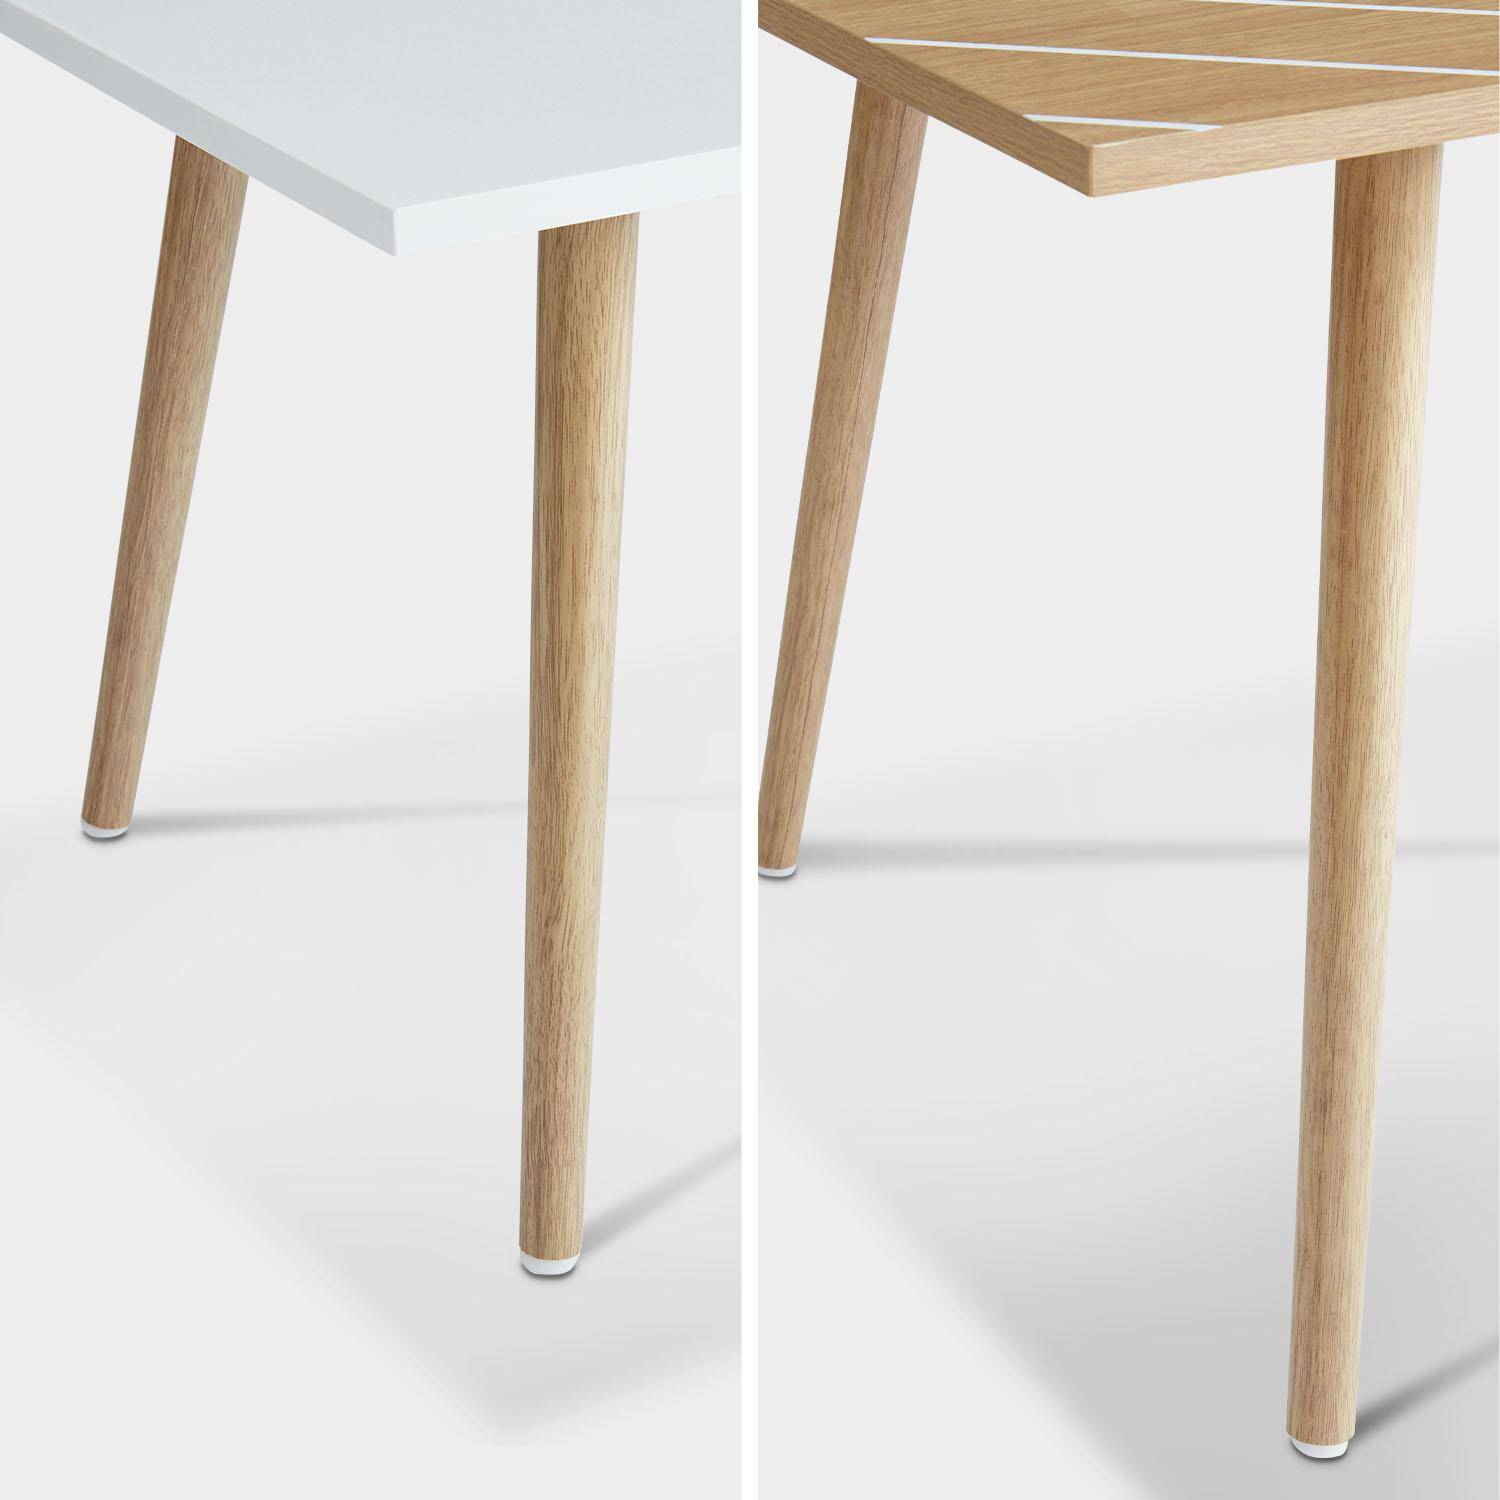 Conjunto de 2 mesas de centro natural y blanco - 110x50x45,5cm y 70x40x39cm - Etnik - base de madera maciza de eucalipto, diseño escandinavo Photo4